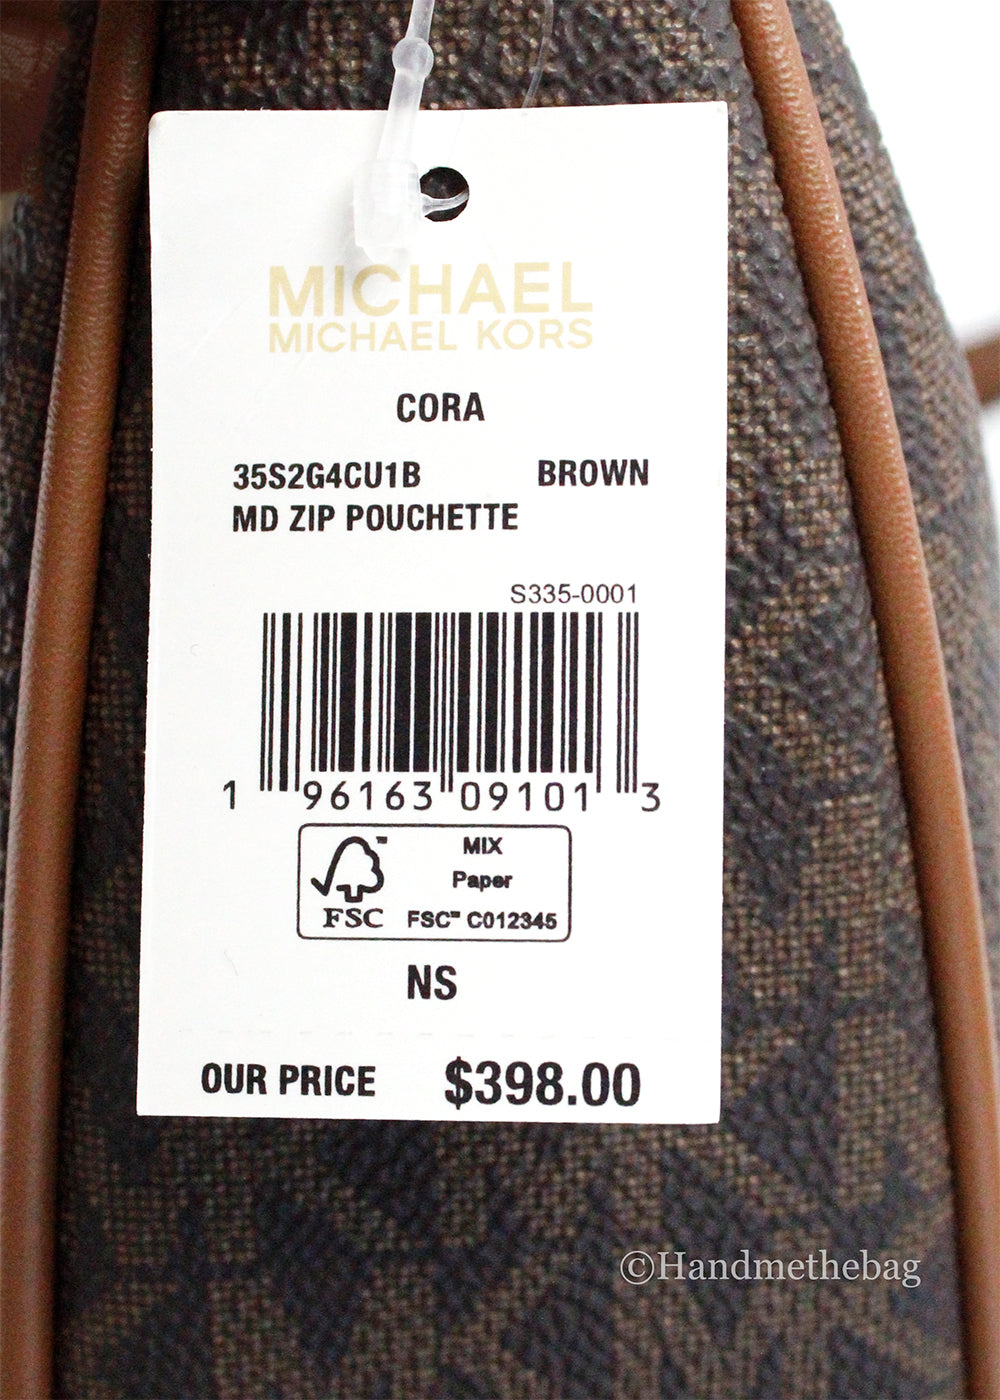 Michael Kors Cora Medium Brown PVC Pouchette Crossbody Bag